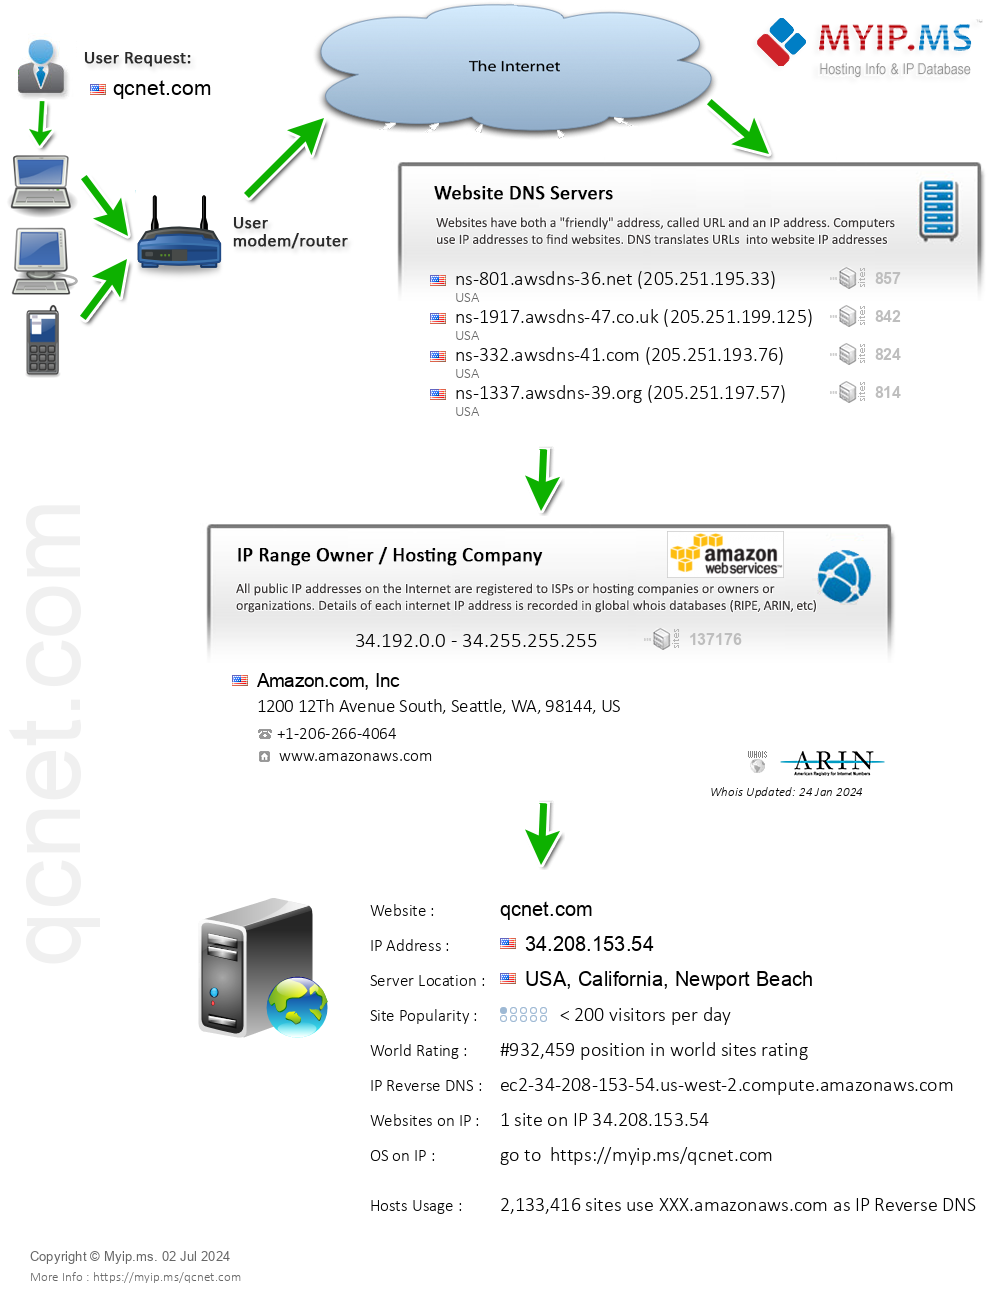 Qcnet.com - Website Hosting Visual IP Diagram